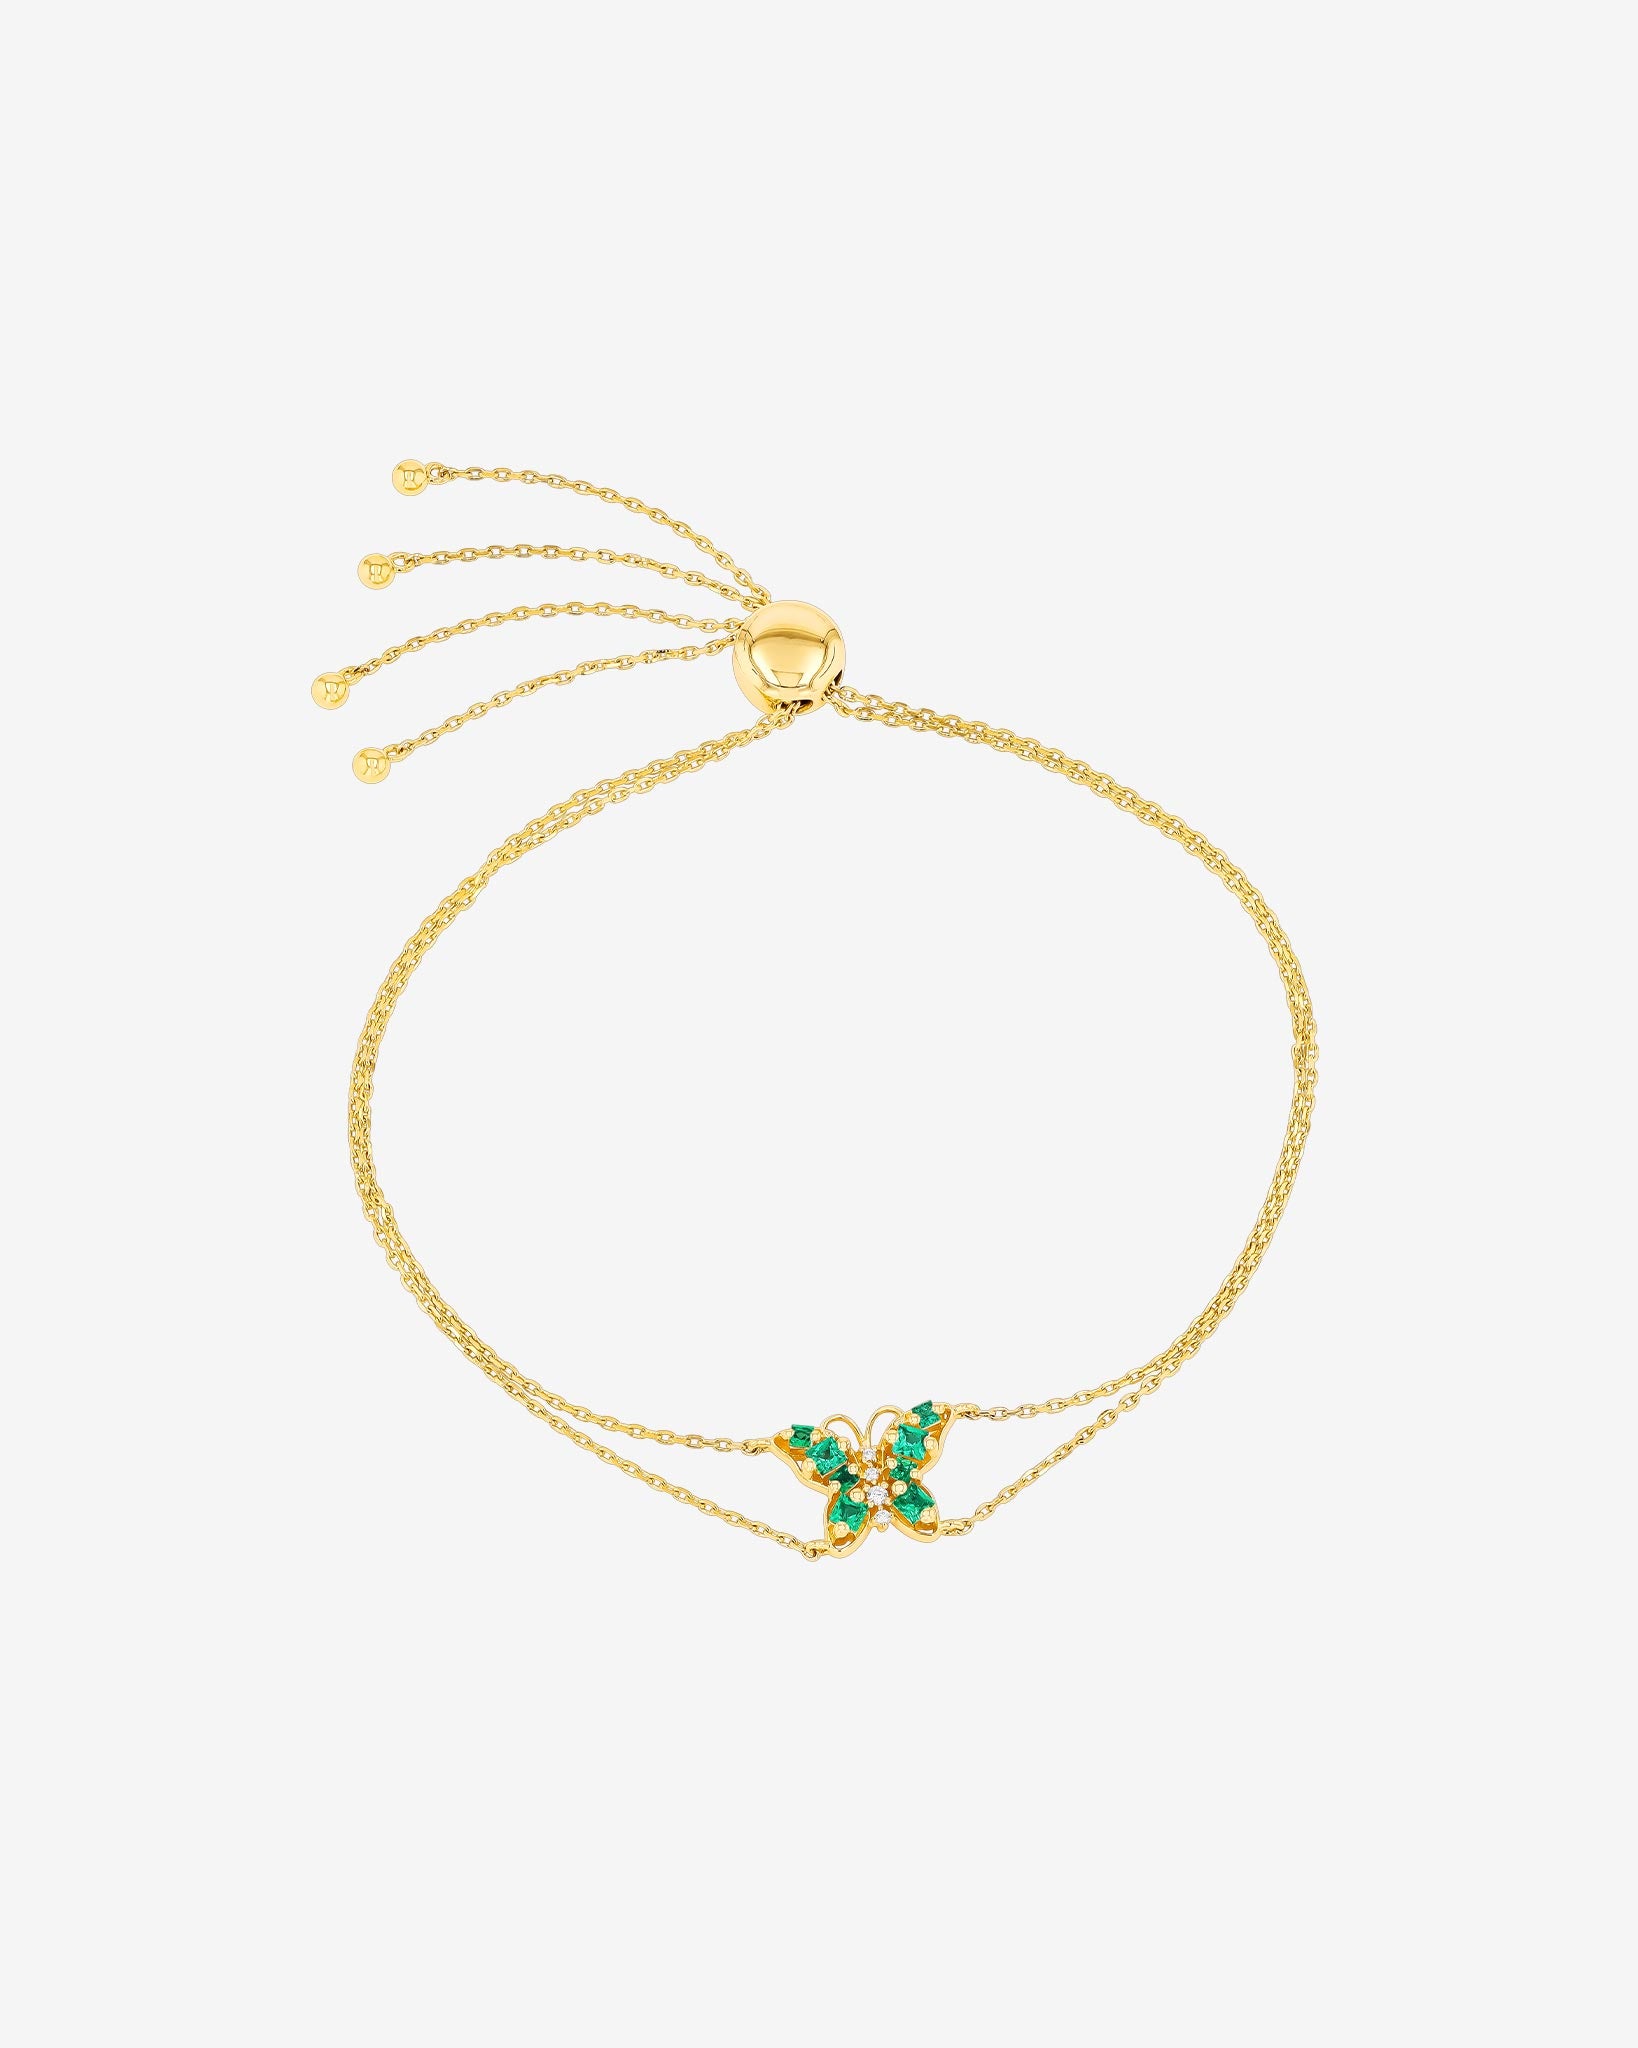 Suzanne Kalan Princess Emerald Mini Butterfly Pulley Bracelet in 18k yellow gold